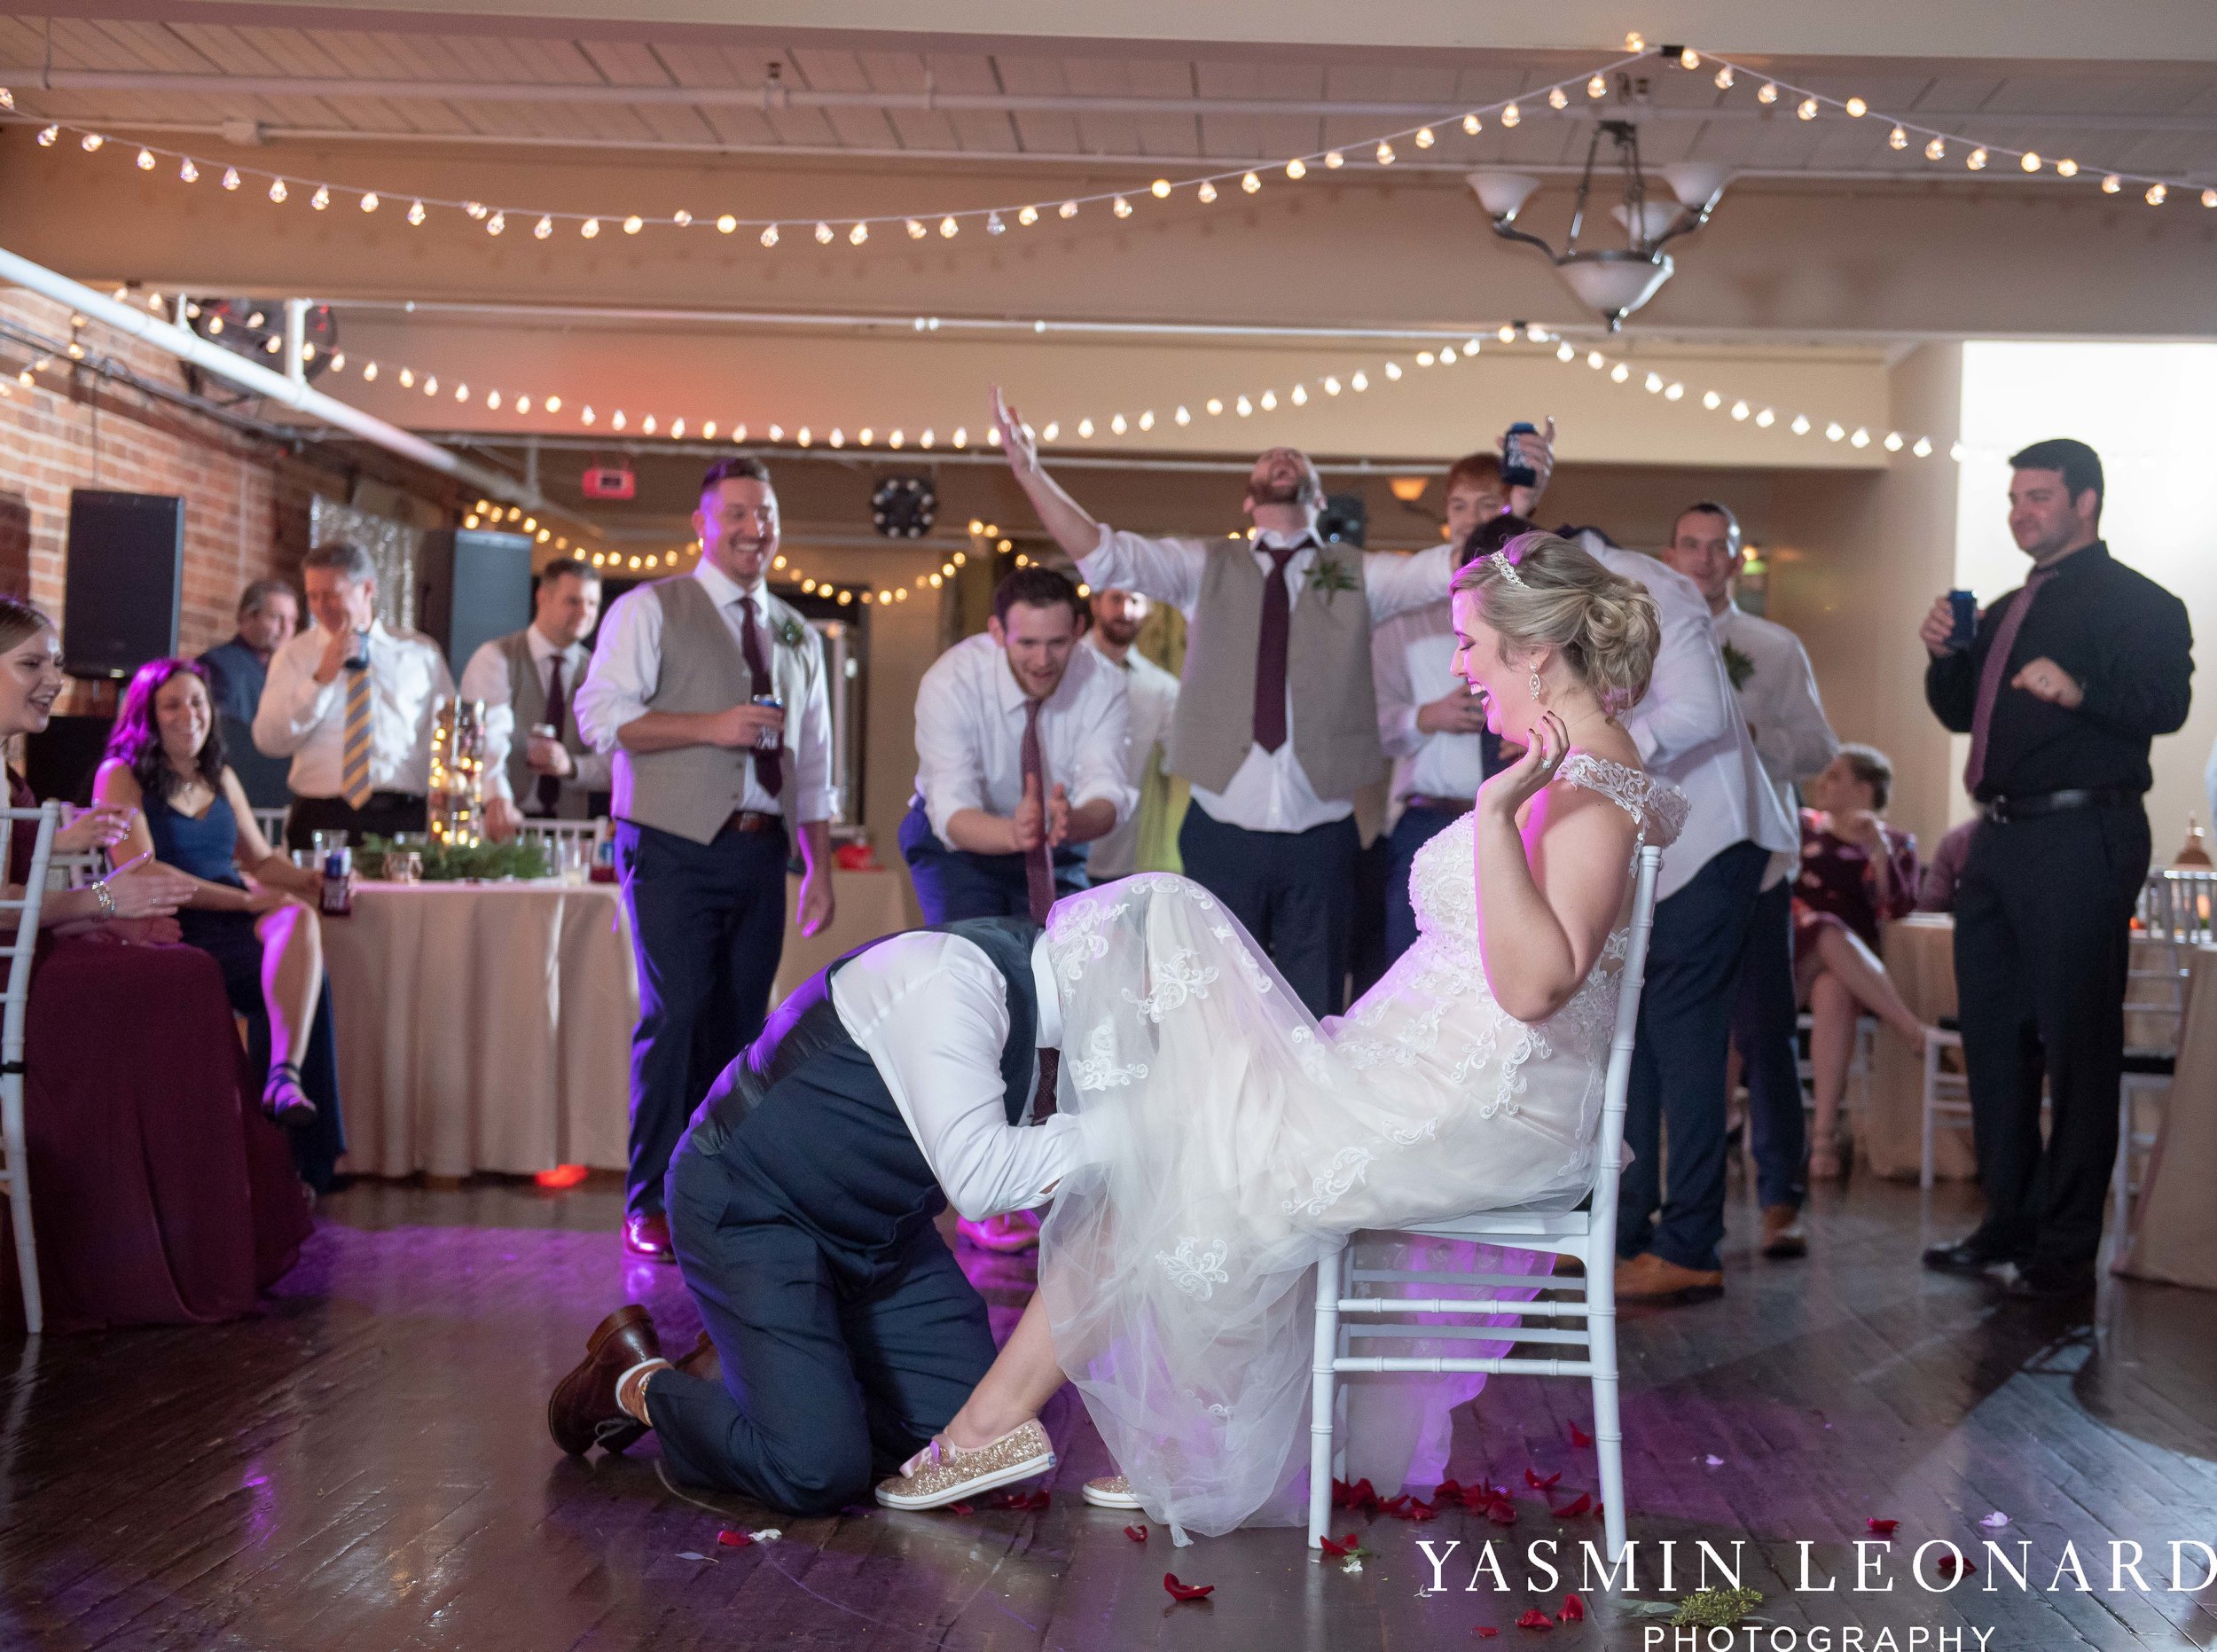 Rebekah and Matt - 105 Worth Event Centre - Yasmin Leonard Photography - Asheboro Wedding - NC Wedding - High Point Weddings - Triad Weddings - Winter Wedding-71.jpg